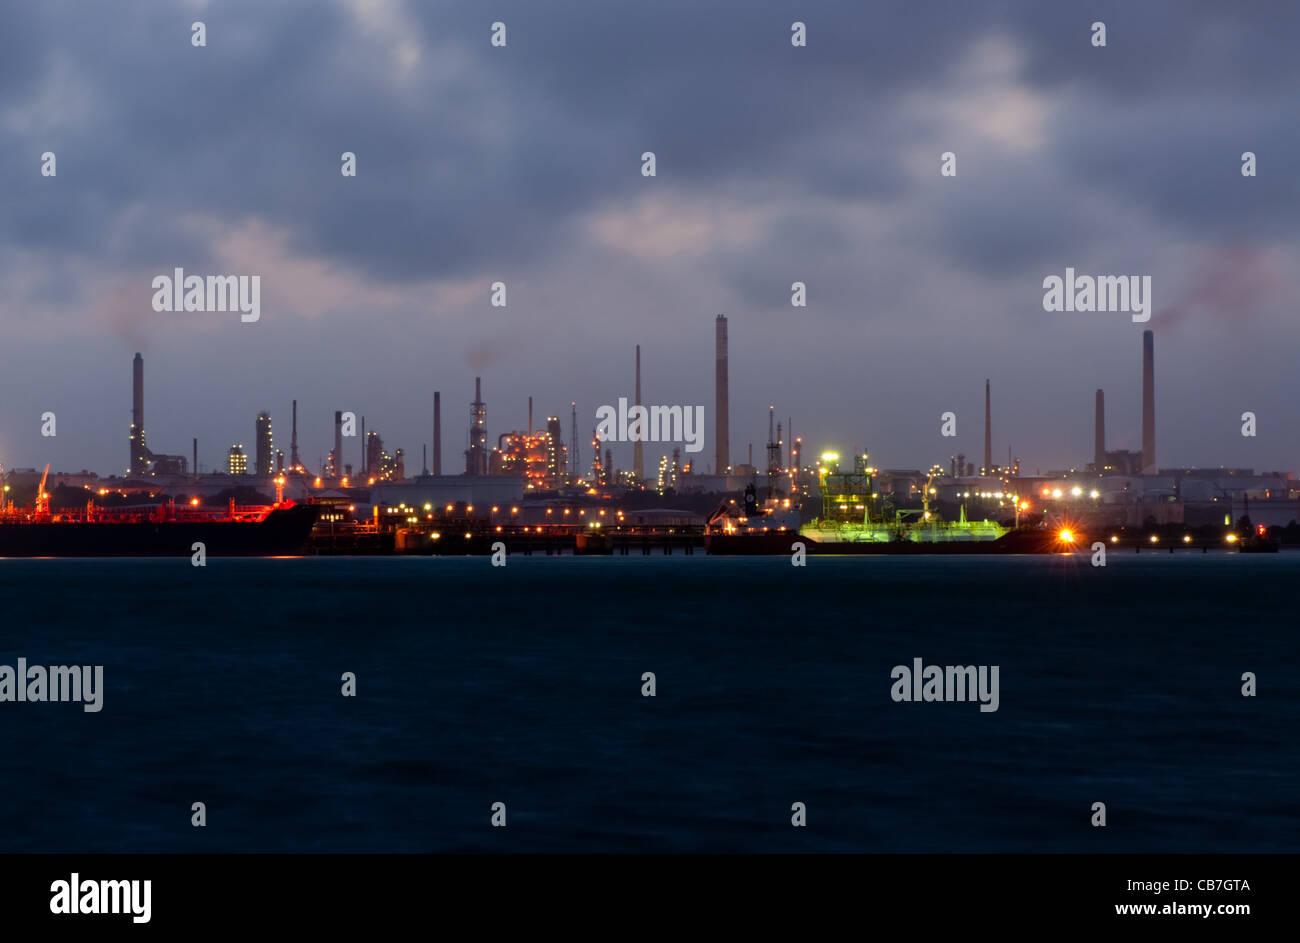 Fawley Oil Refinery Stock Photo